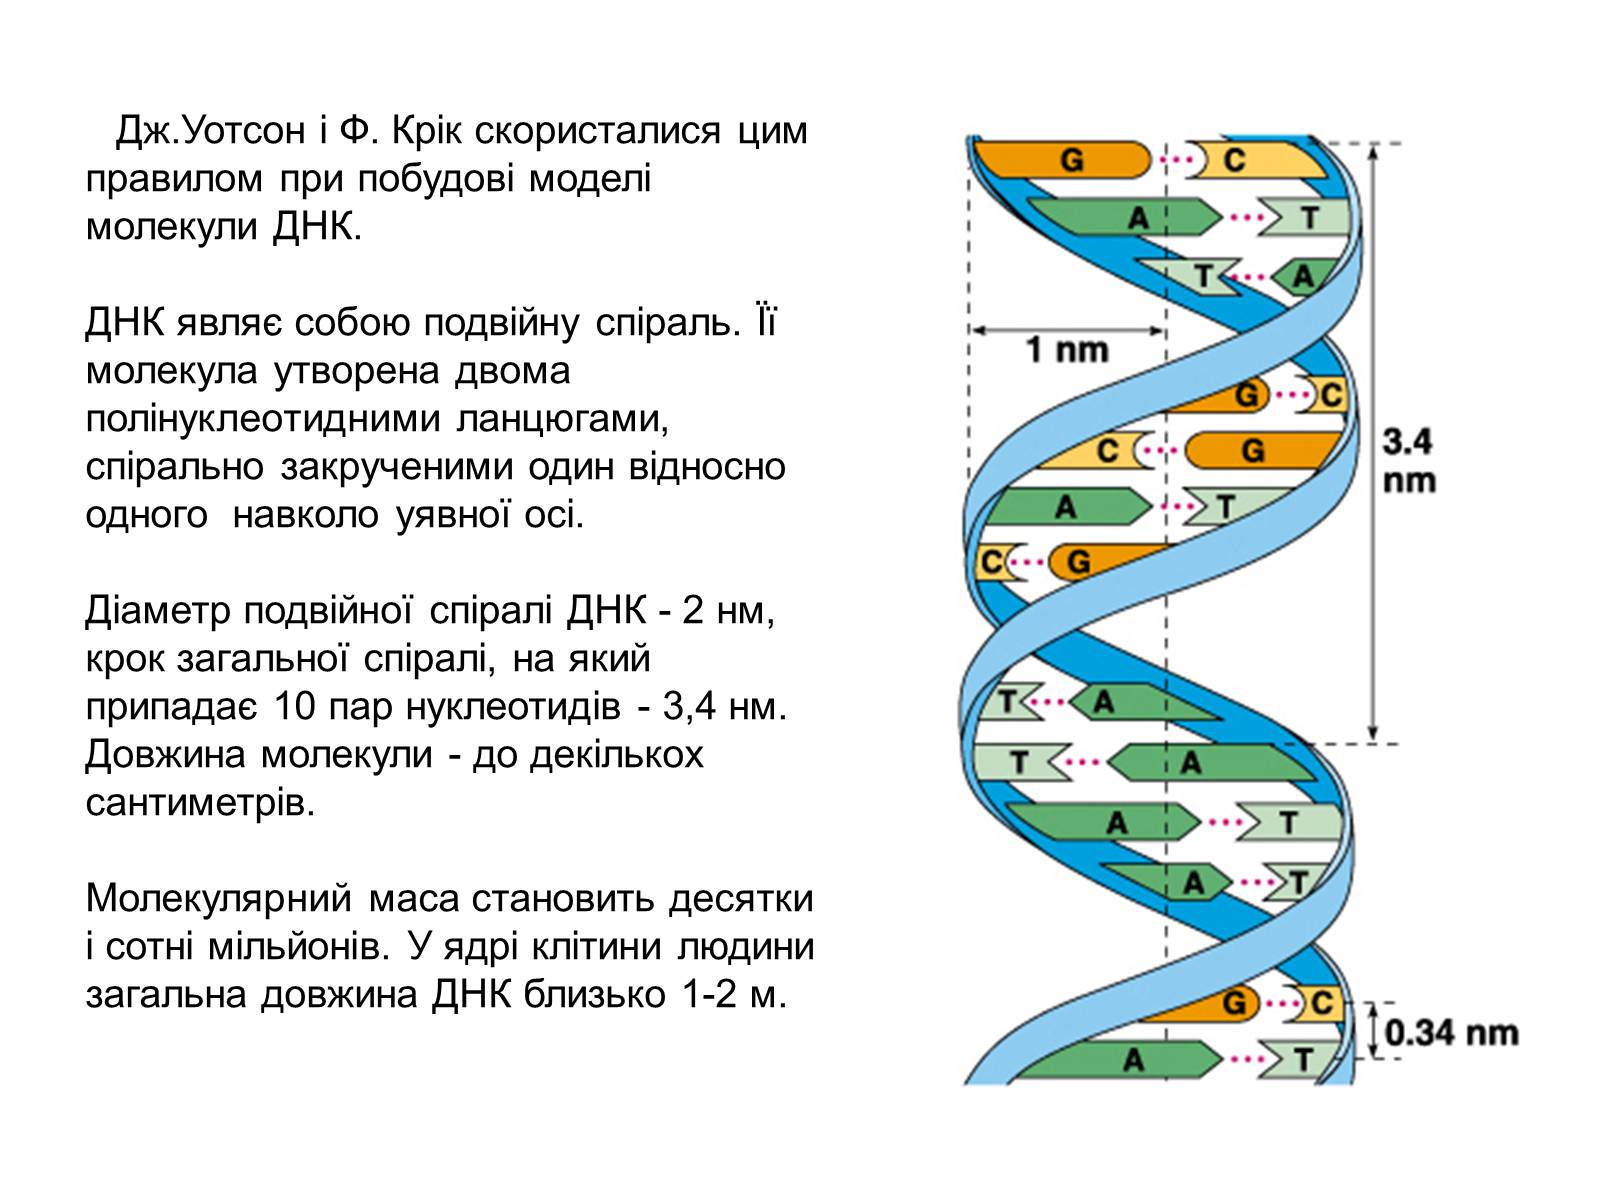 Характеристика структуры днк. Модель двойной спирали молекулы ДНК. Охарактеризуйте структуру ДНК. Параметры двойной спирали ДНК. Краткая характеристика ДНК.